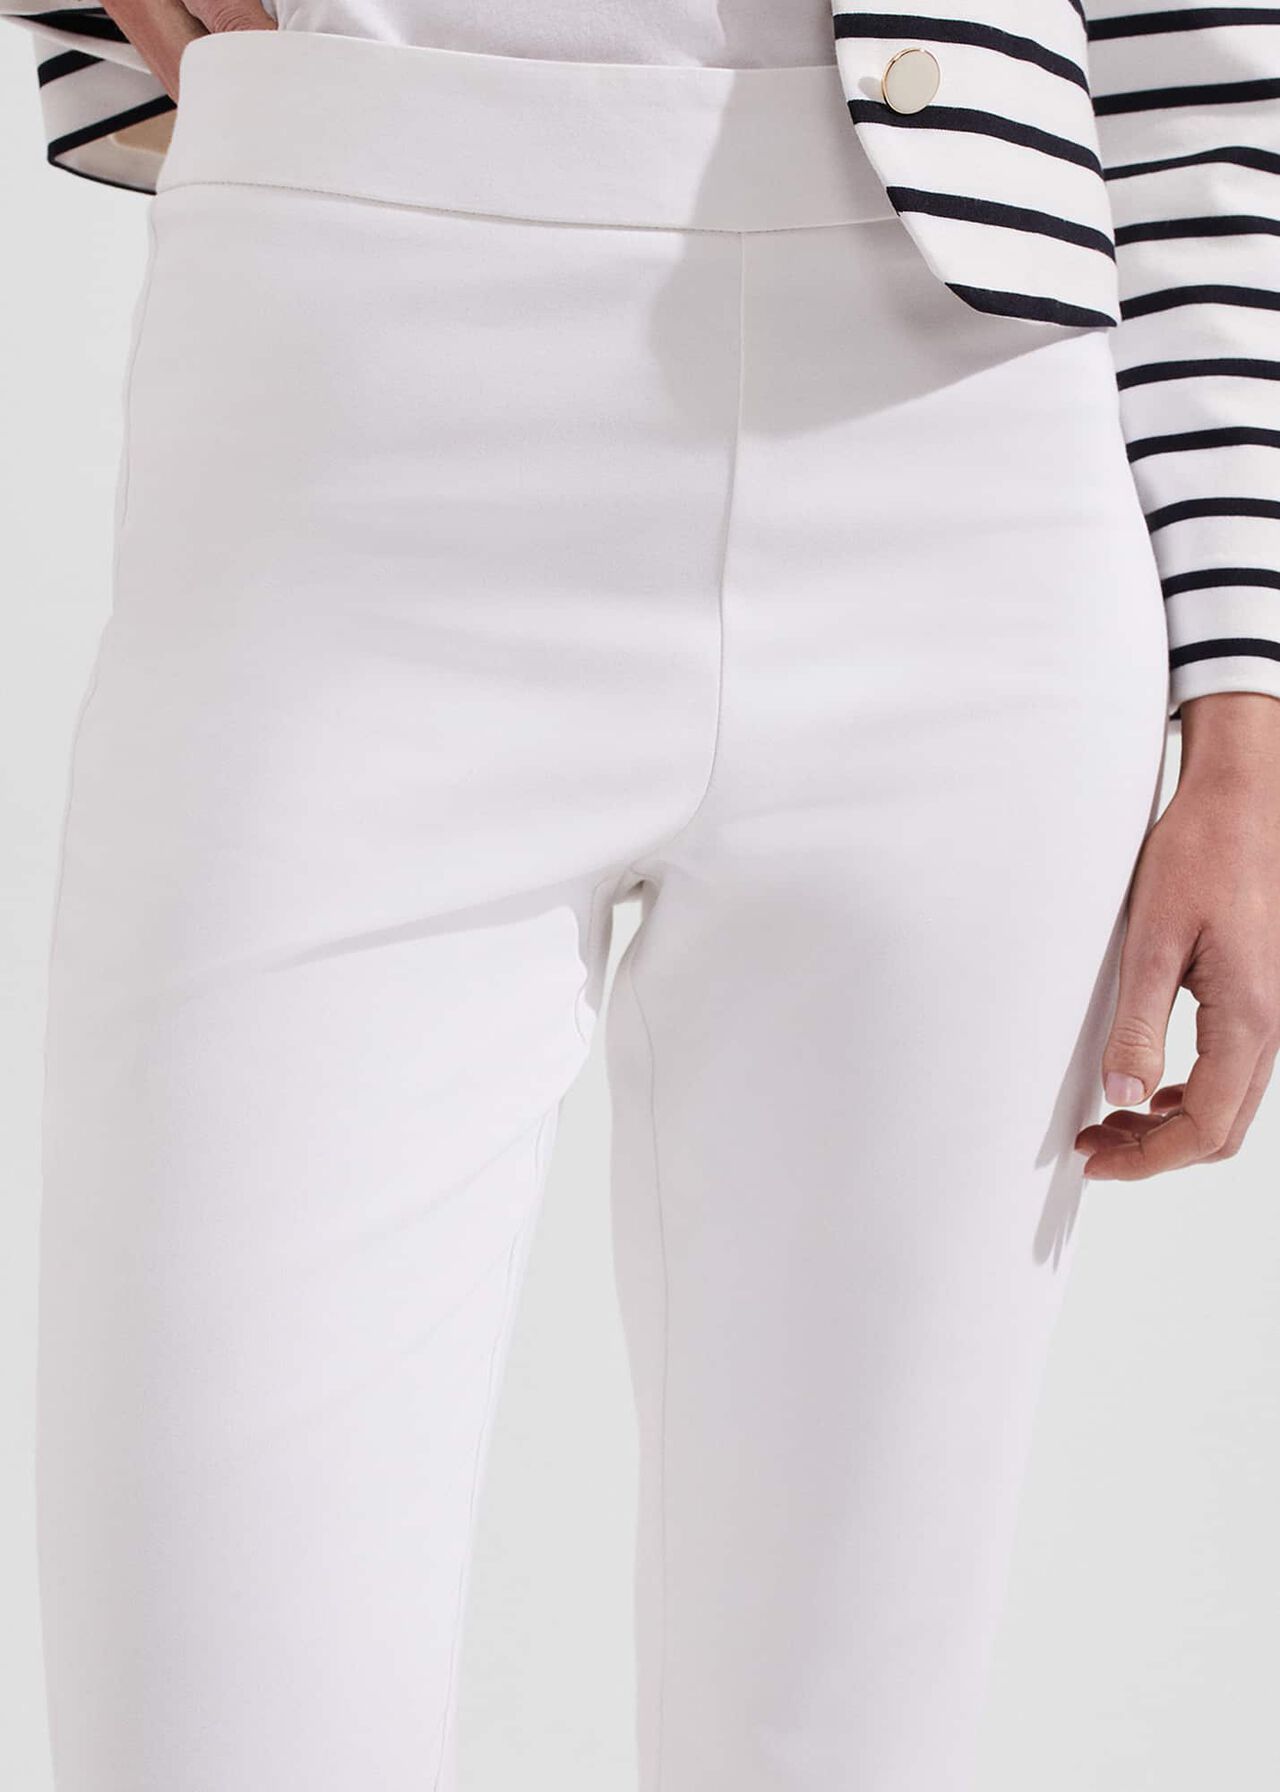 Kaya Capri Trousers, White, hi-res